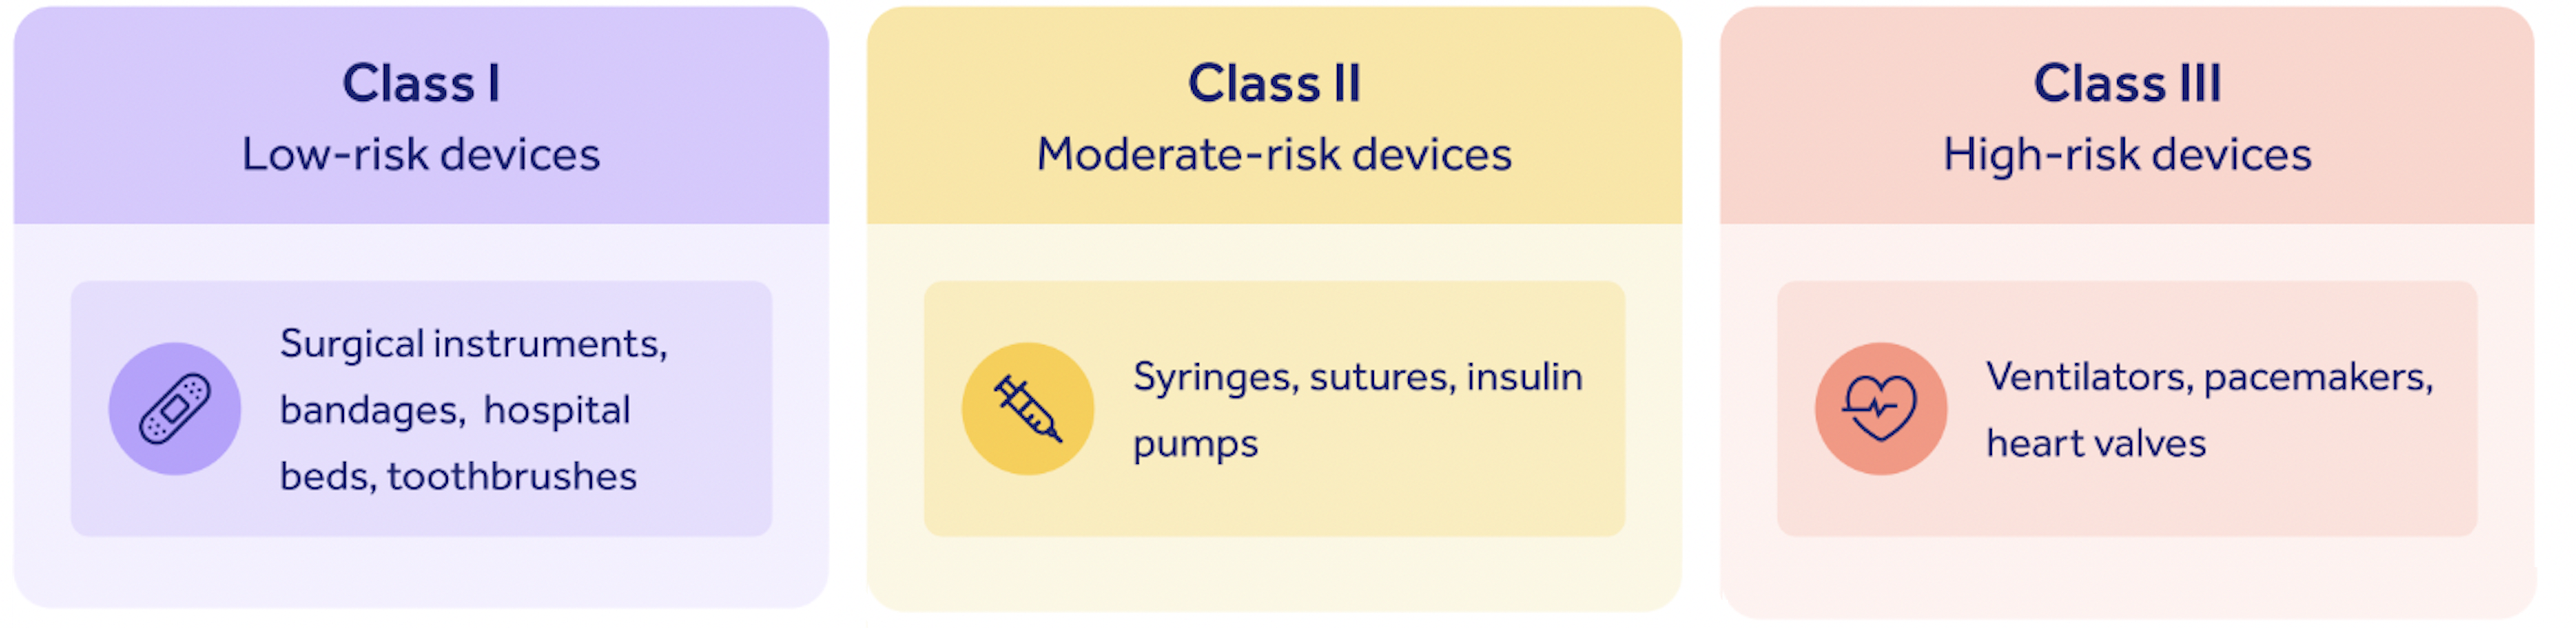 FDA medical device classes